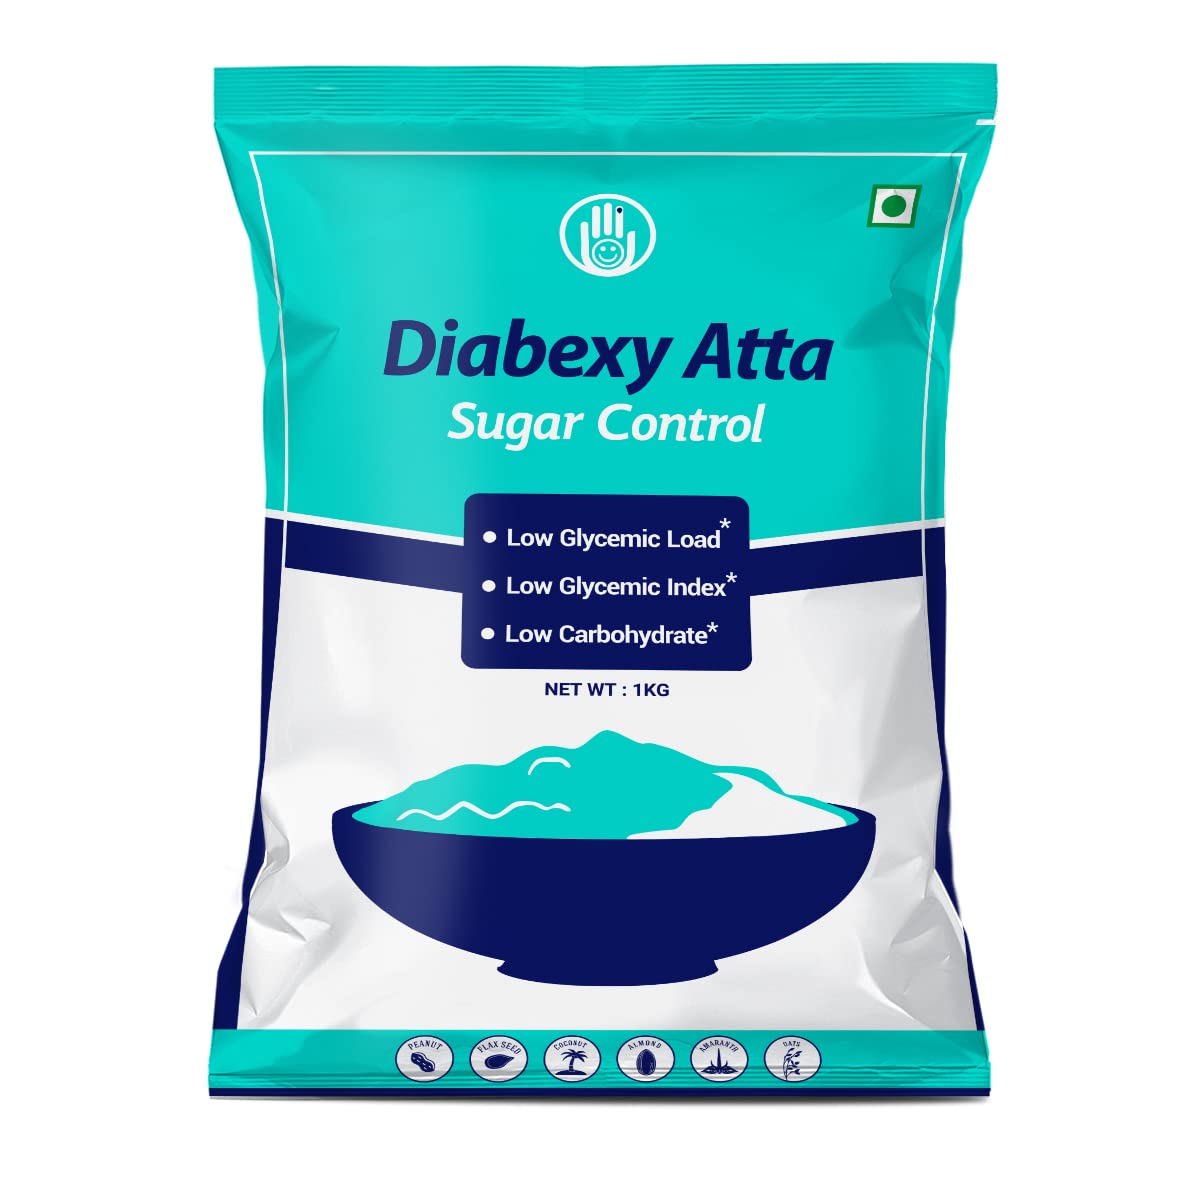 Diabexy Atta Sugar Control for Diabetes – 1kg